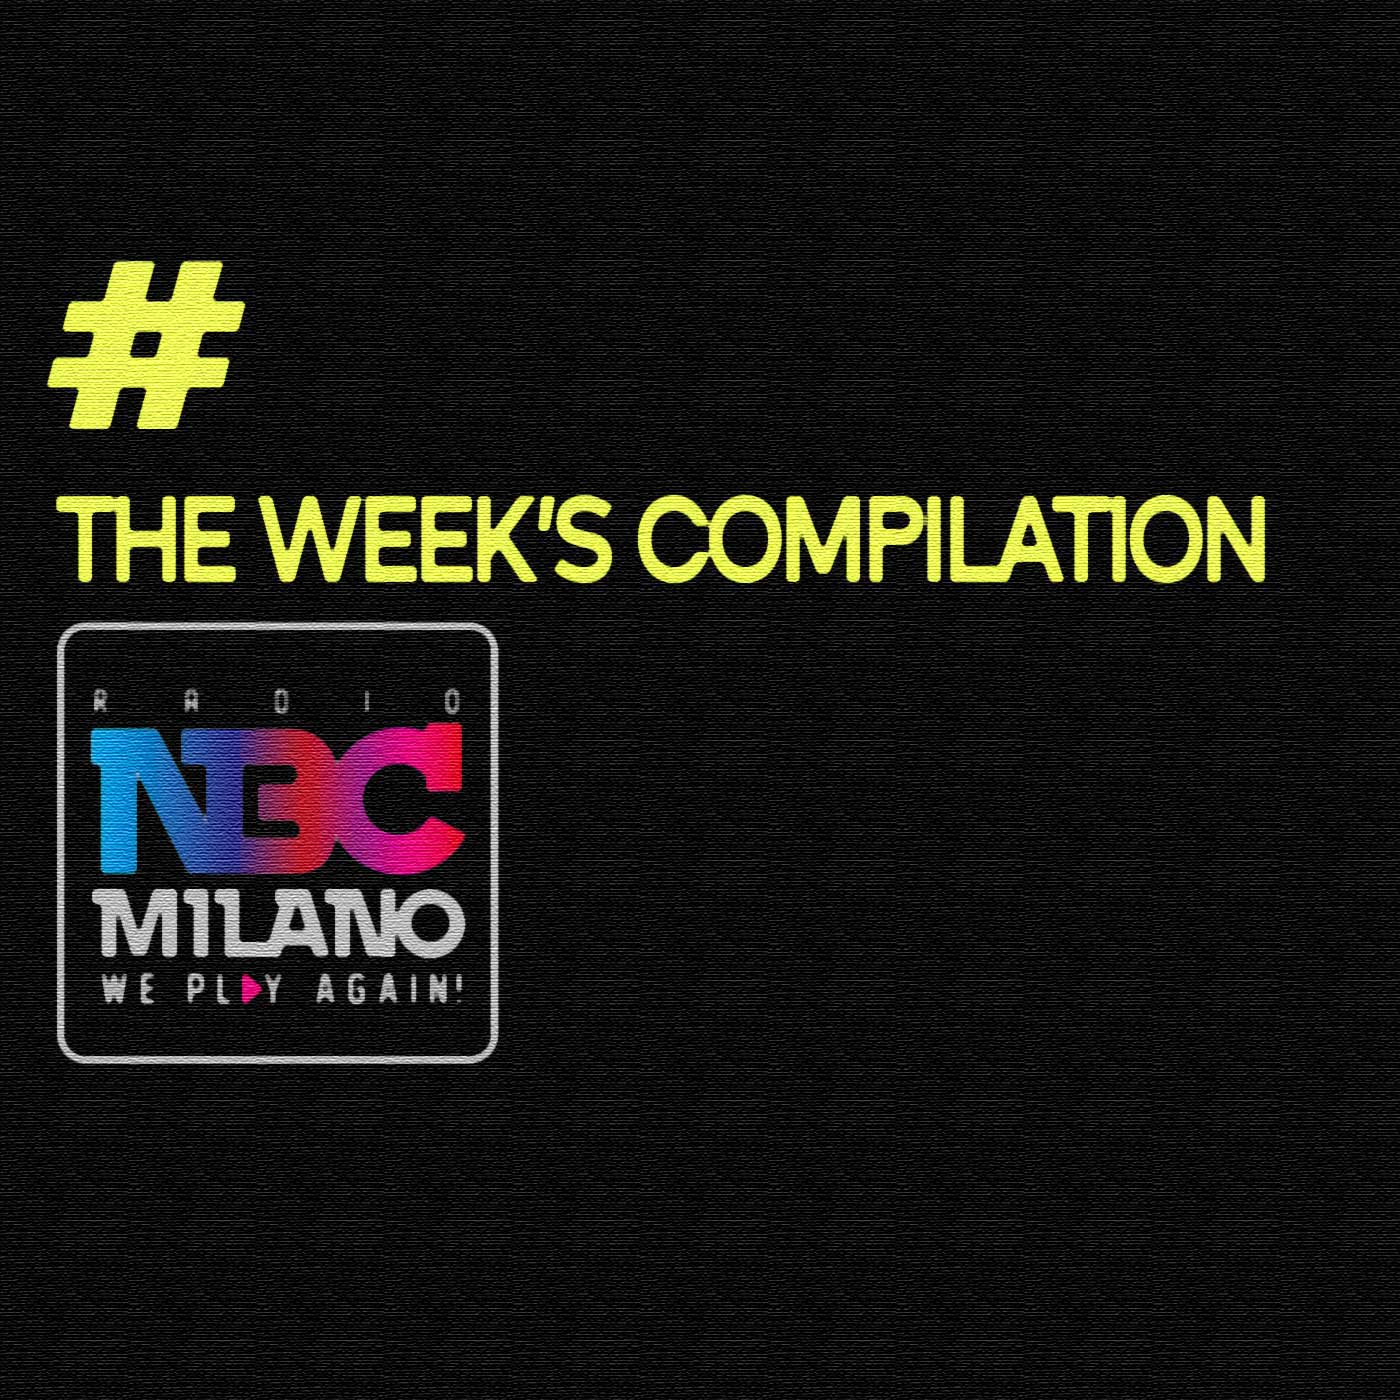 WEEK'S COMPILATION NBC MILANO